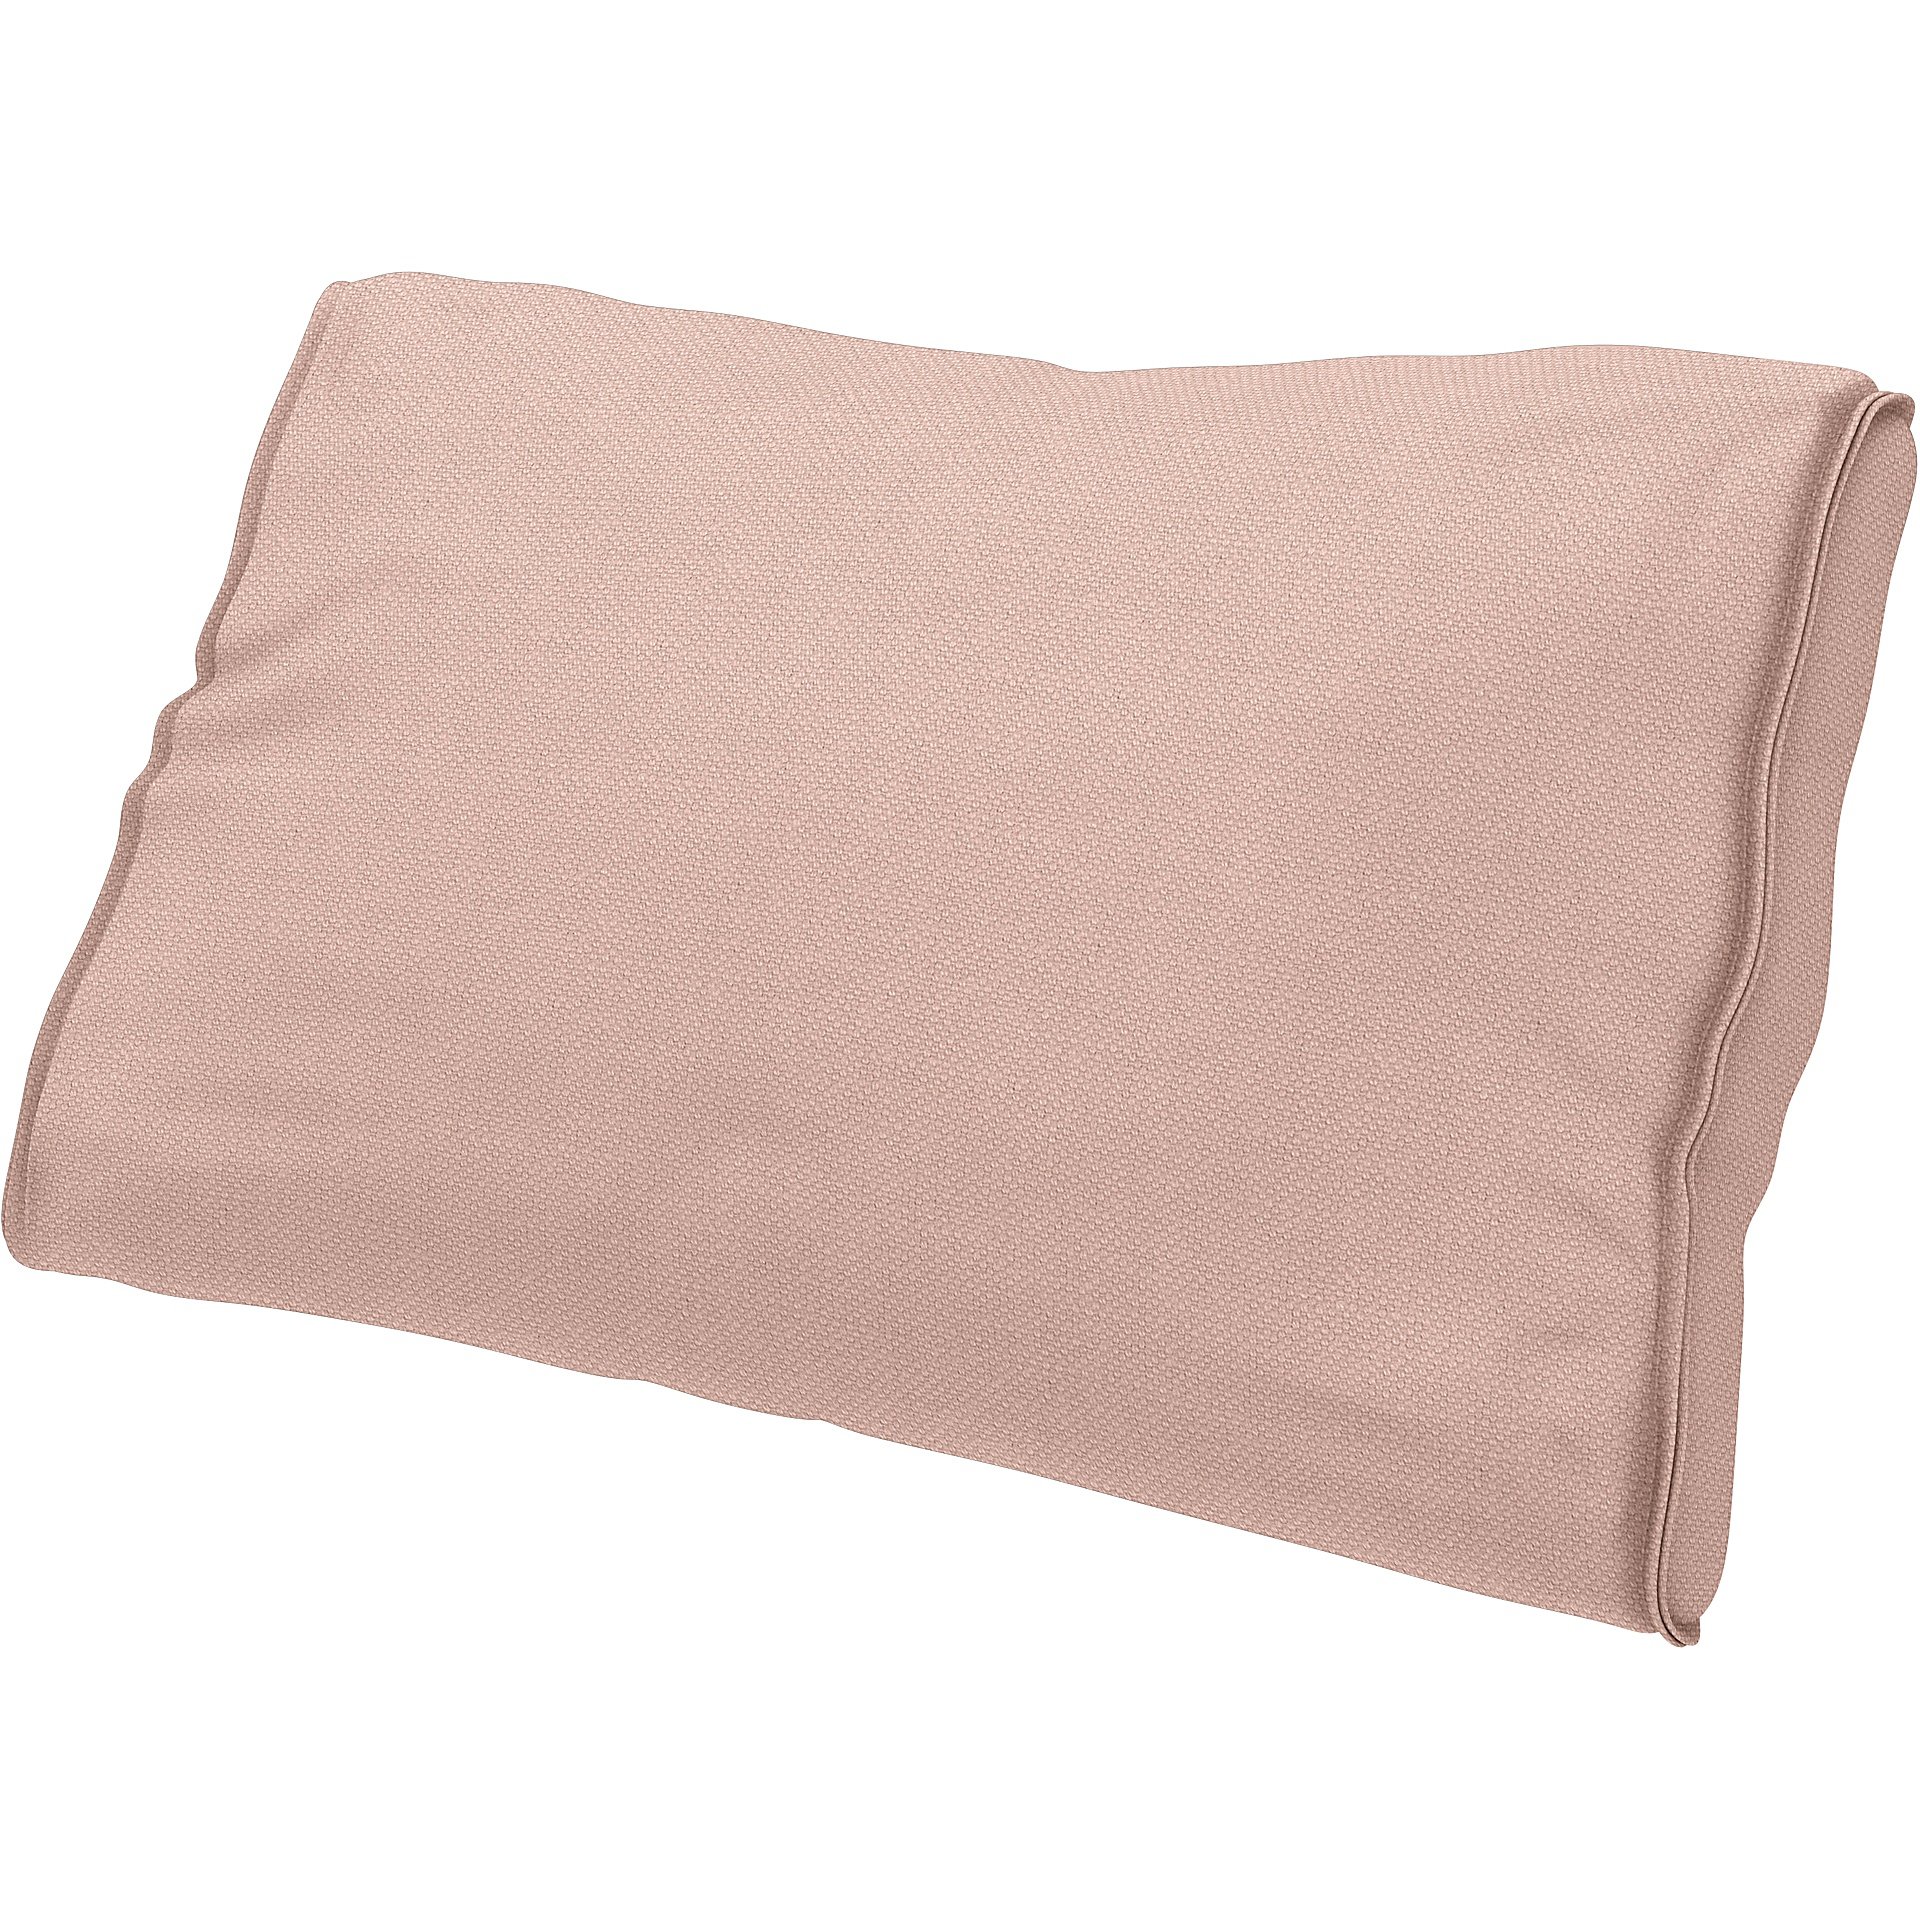 IKEA - Lumbar cushion cover Farlov Loose fit, Blush, Linen - Bemz